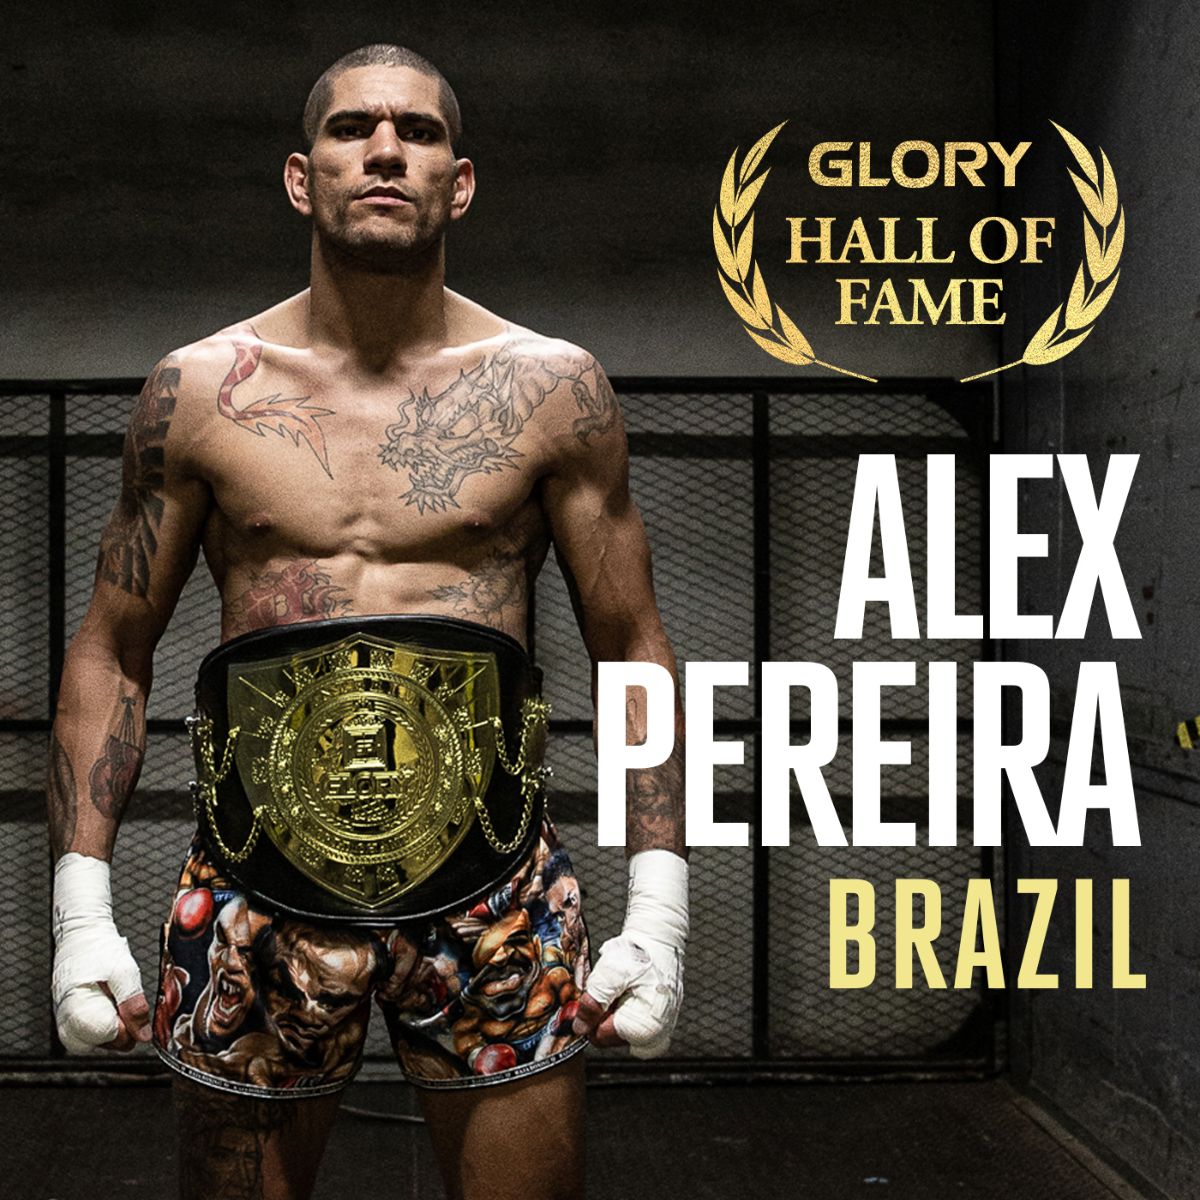 Alex Pereira, GLORY Hall of Fame